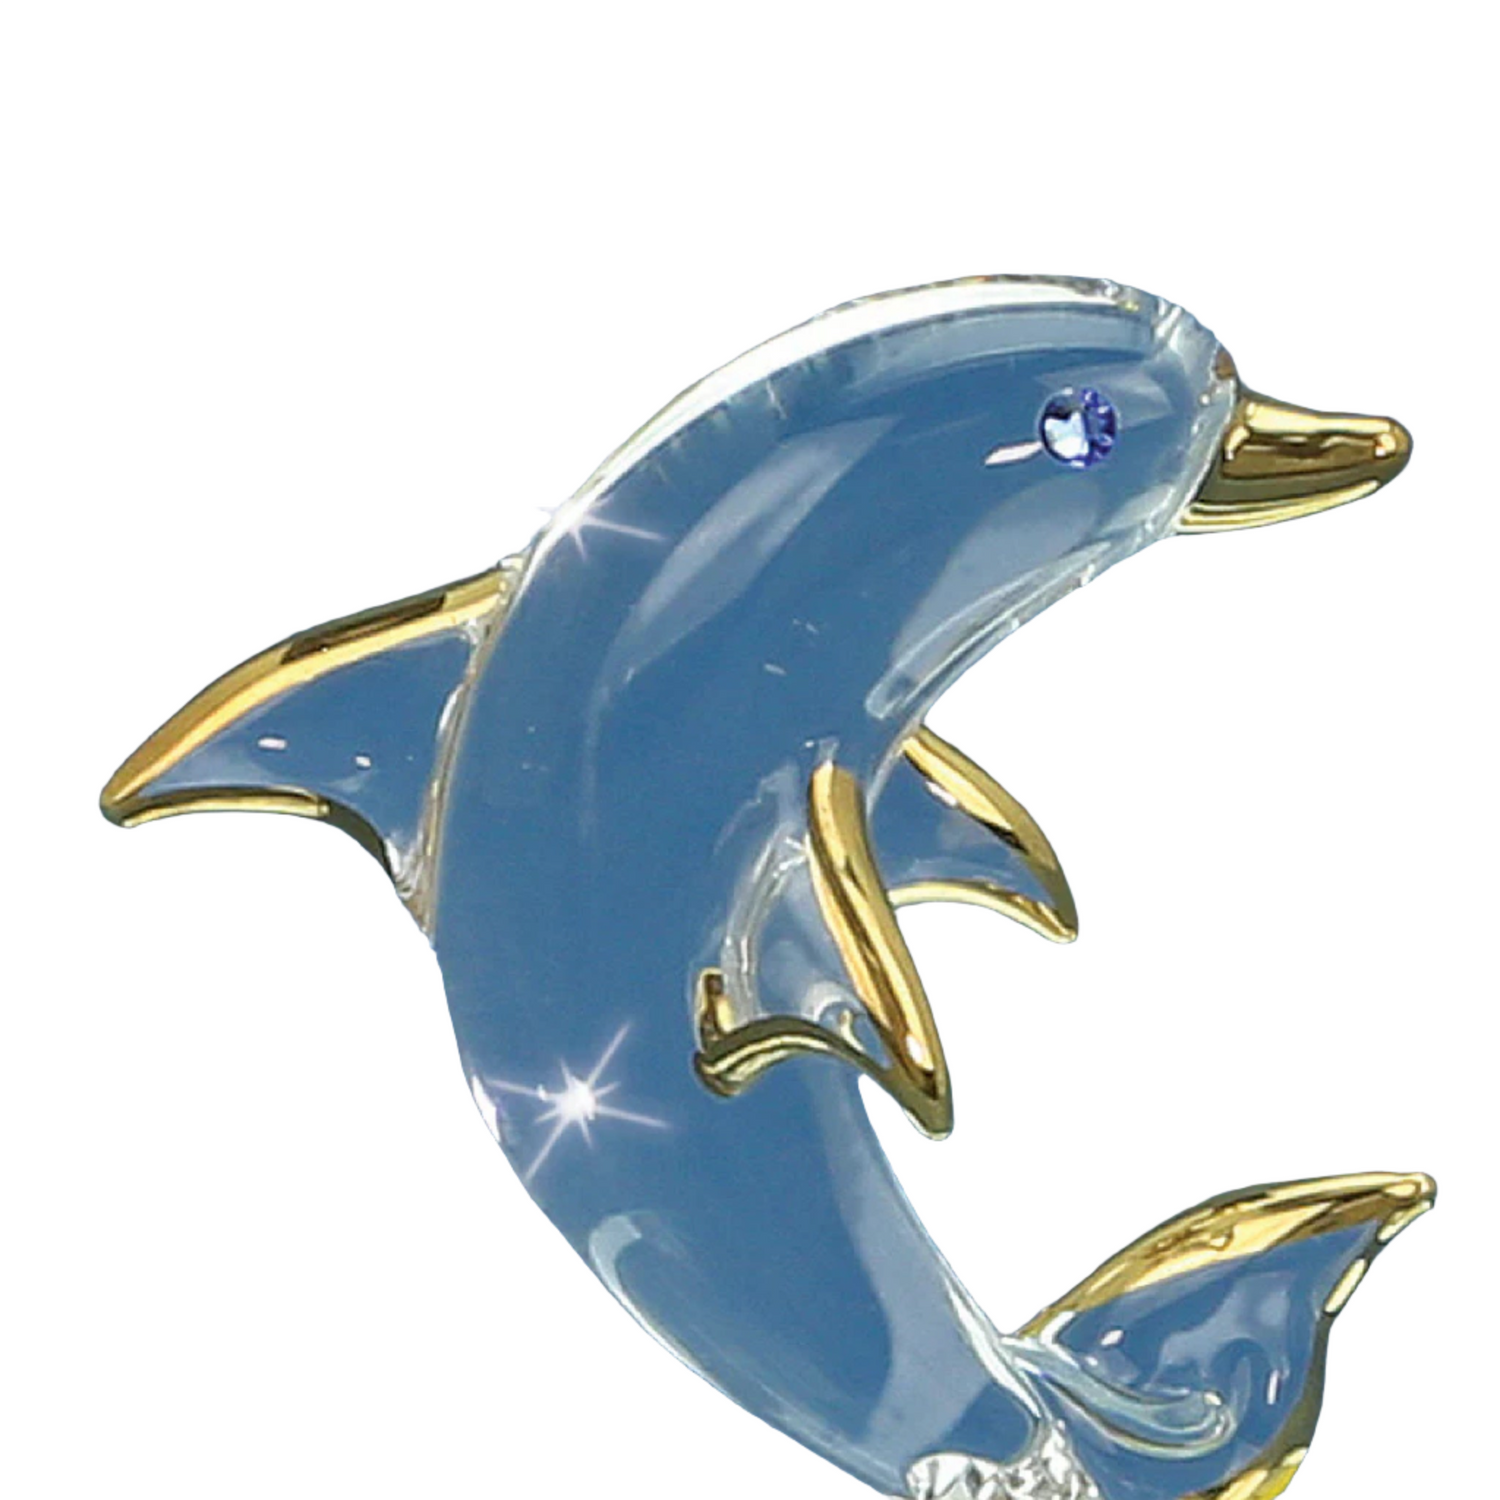 Glass Baron Sunset Dolphin Figure